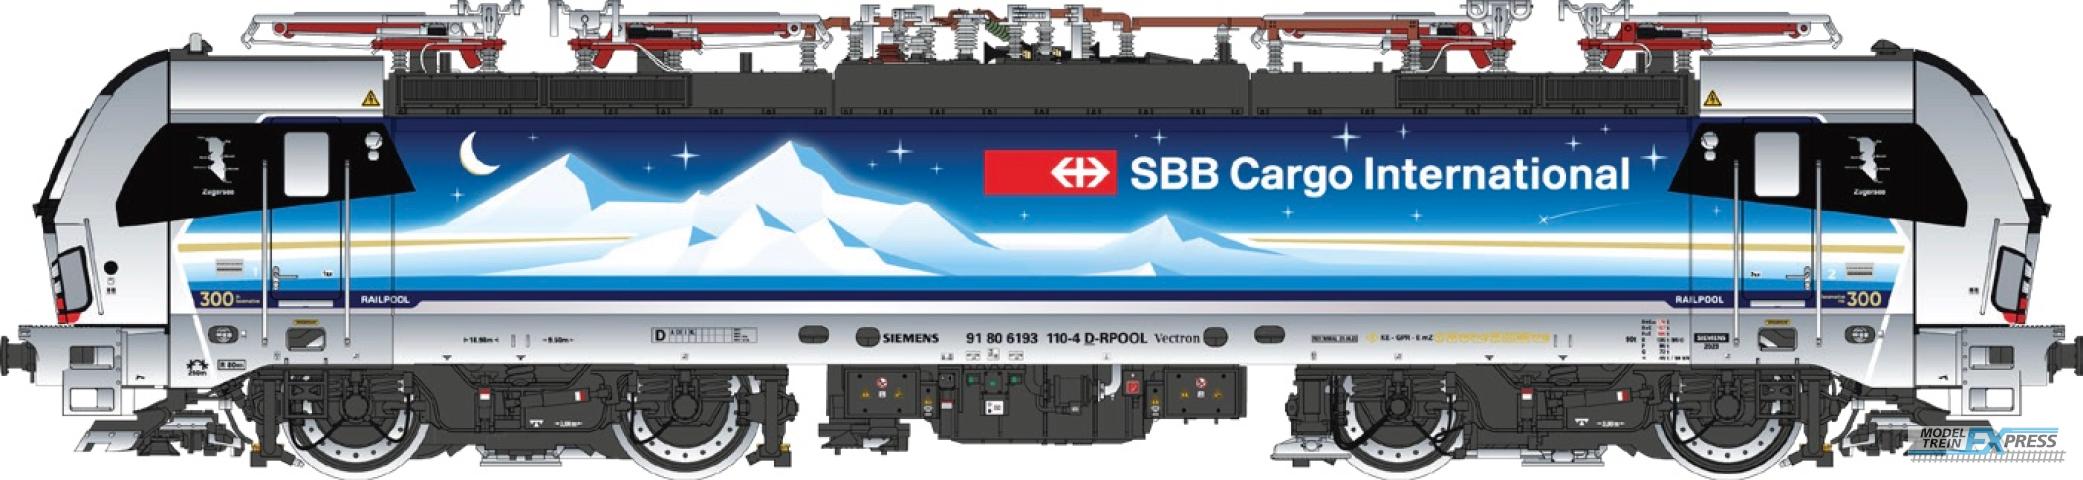 LS Models 16562 SBB Cargo International / Railpool 91 80 6193 110-4 D-RPOOL  /  Ep. VI  /  DB  /  HO  /  AC  /  1 P.